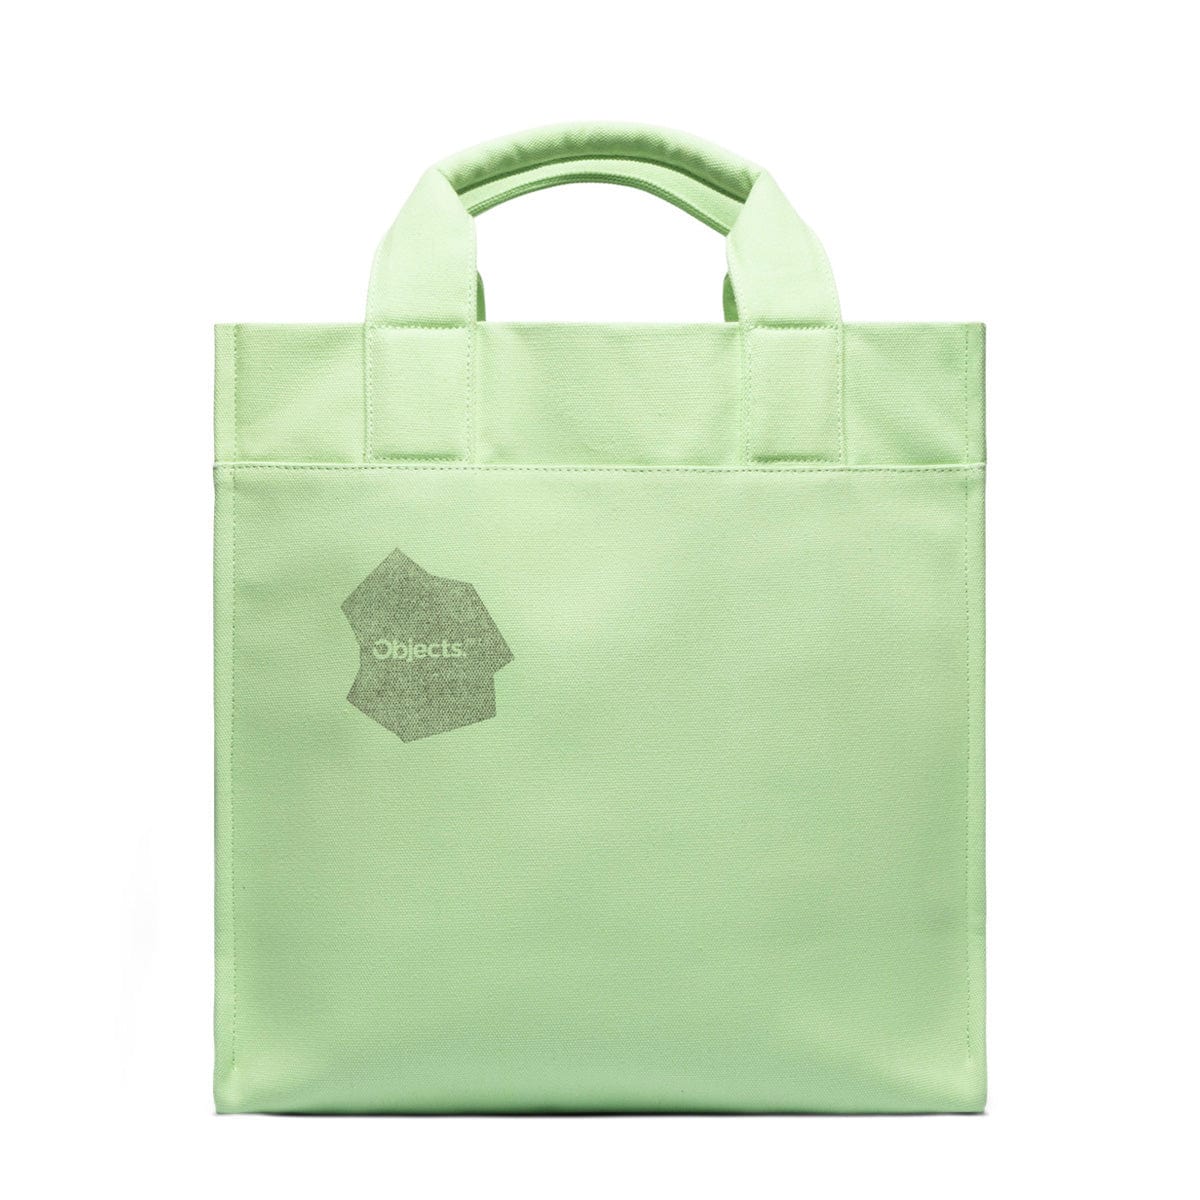 Chanel Neoprene Flower Embellished Flap Bag, IetpShops